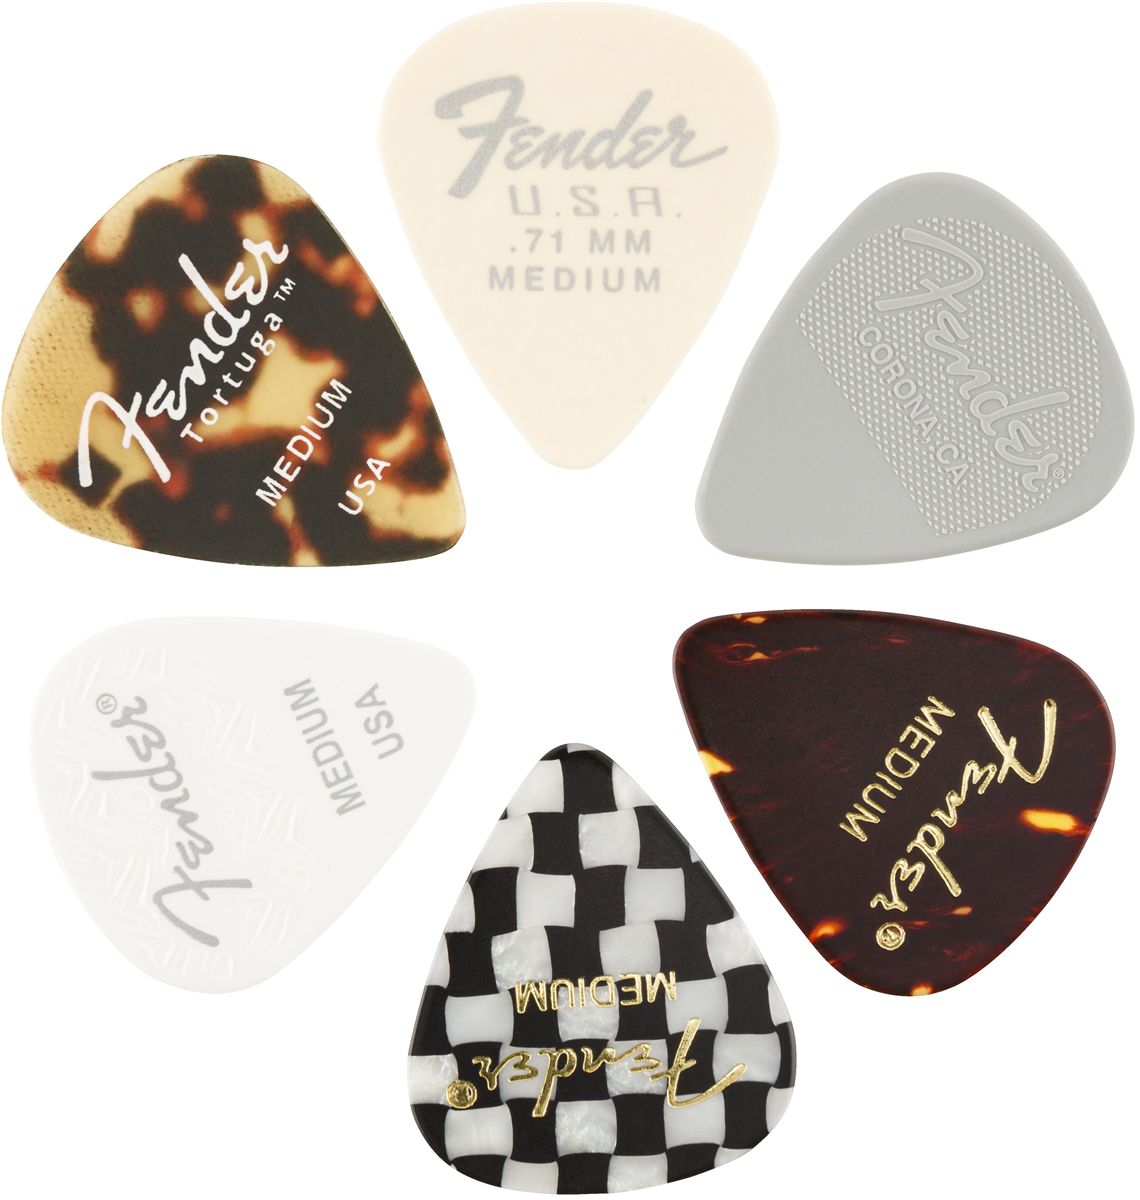 An image of Fender 351 Shape, Material Medley, Medium Picks, 6 Pack | PMT Online